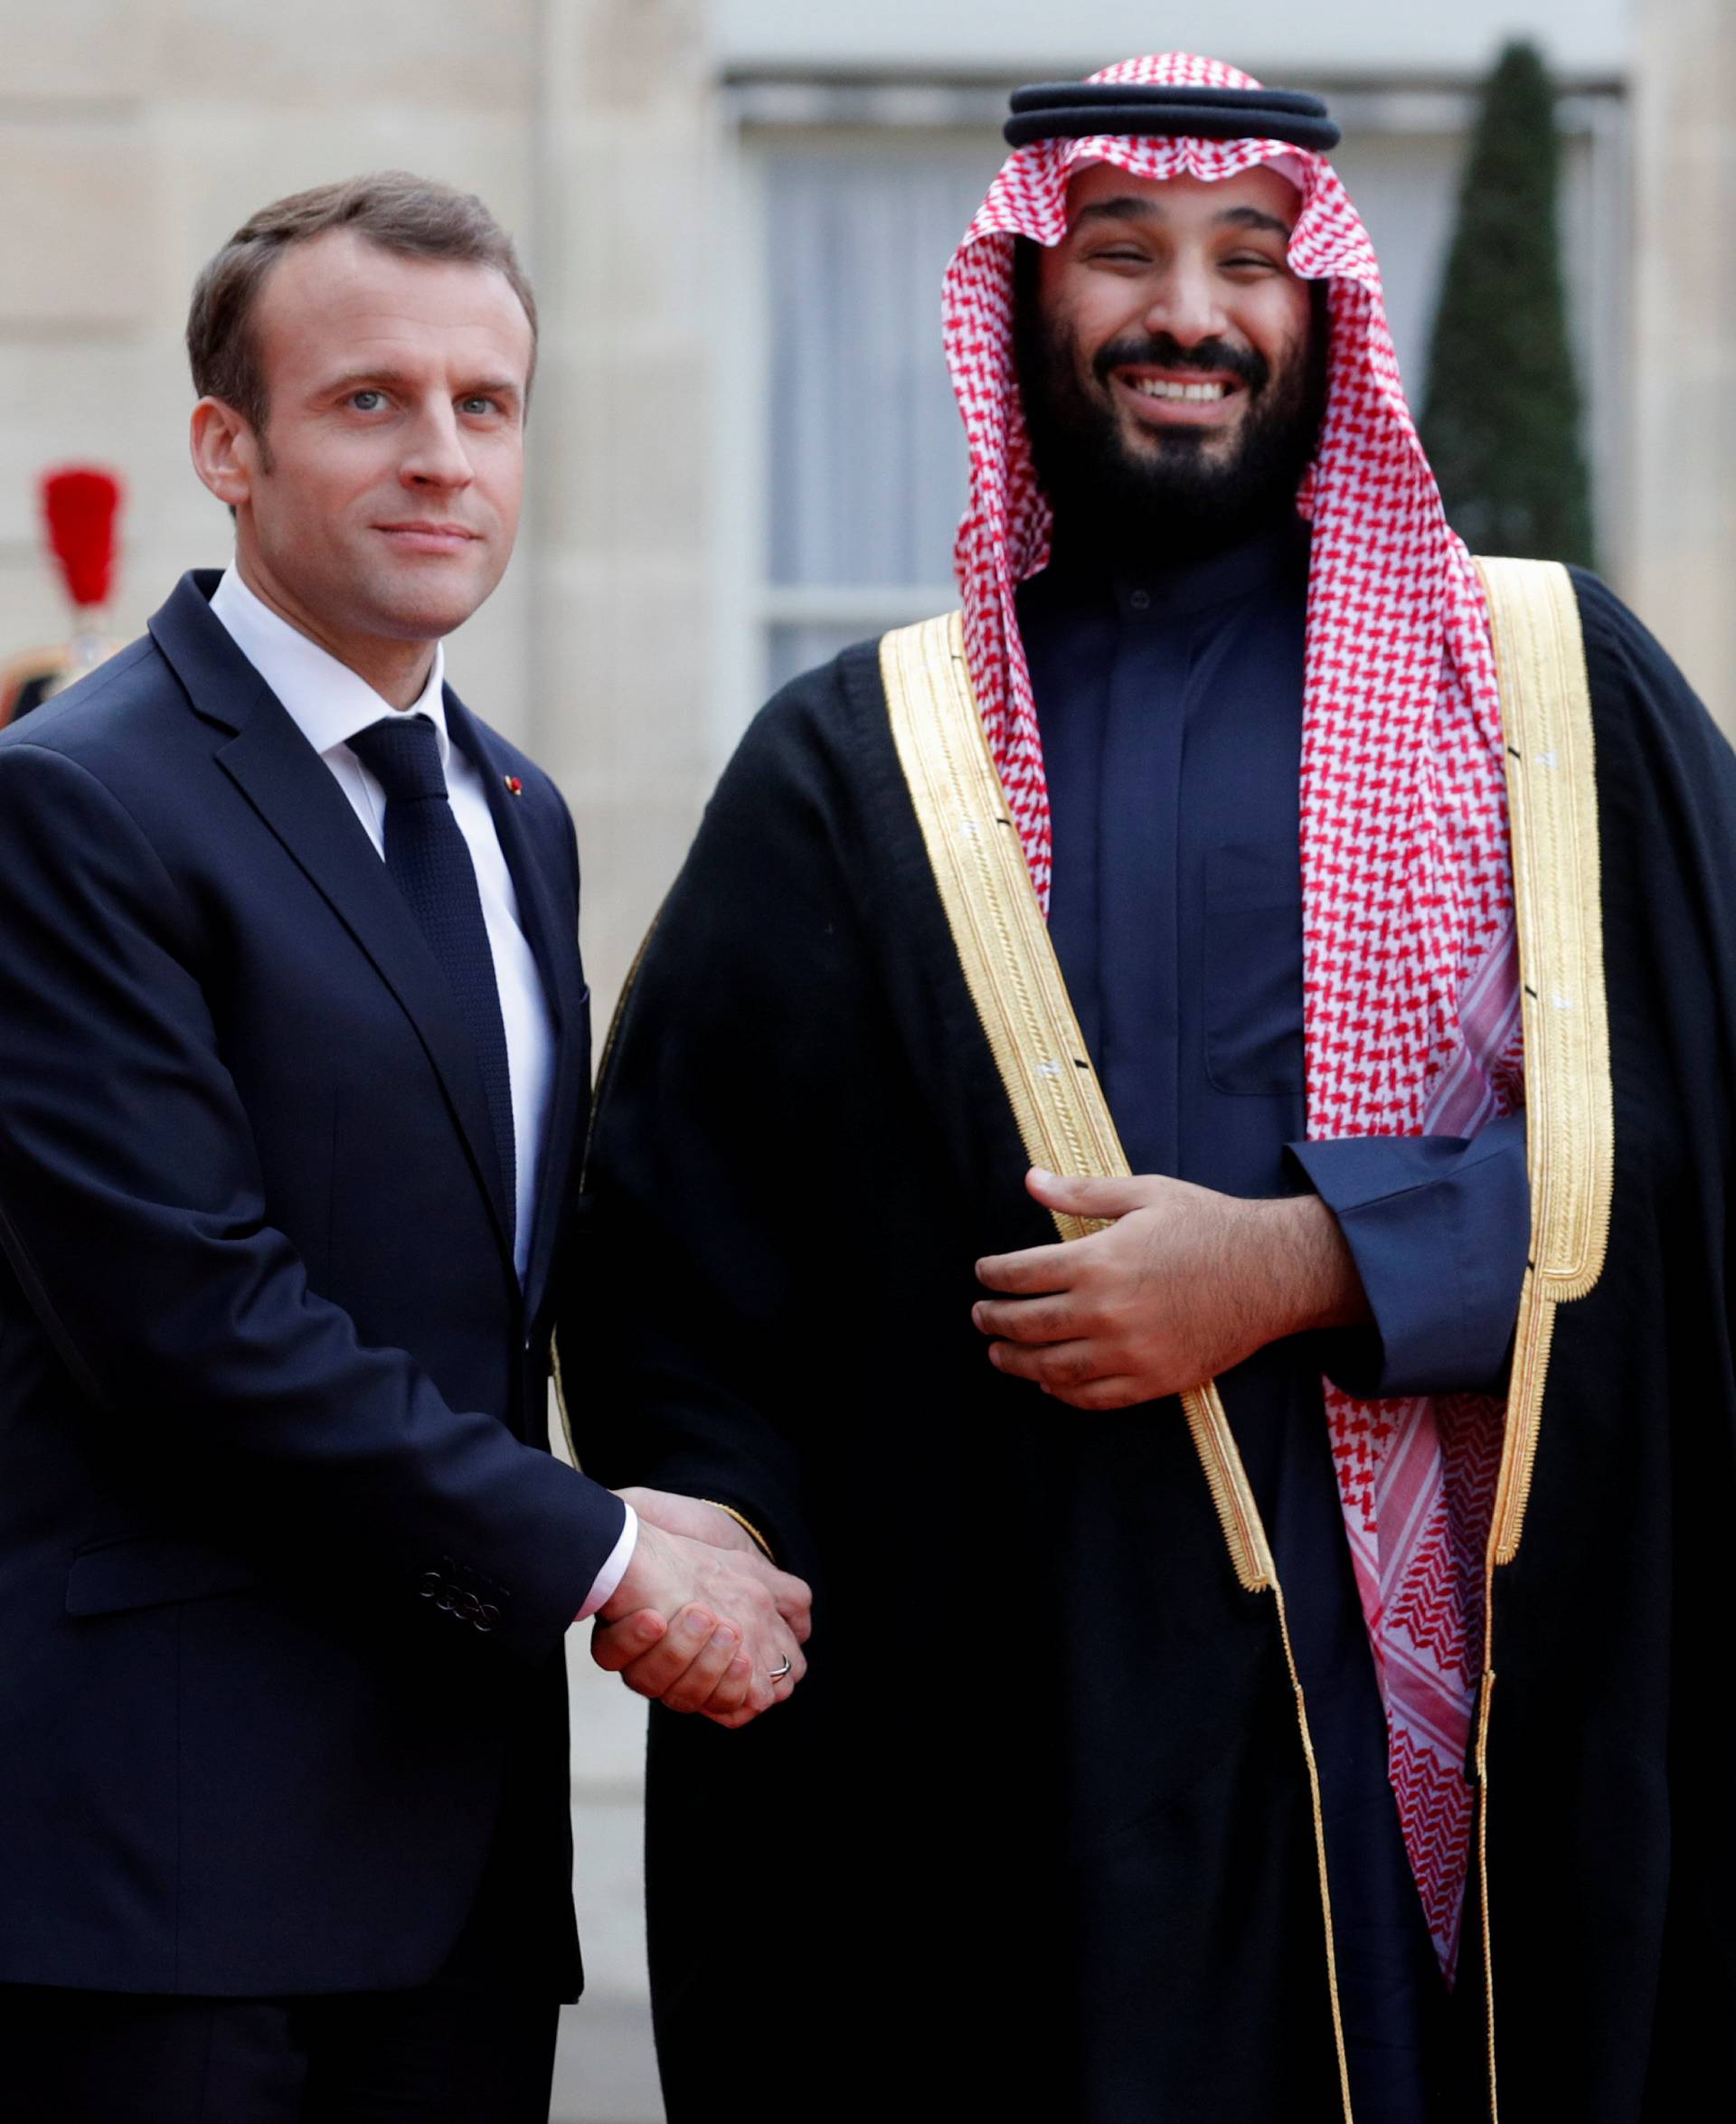 French President Emmanuel Macron welcomes Saudi Arabia's Crown Prince Mohammed bin Salman as he arrives at the Elysee Palace in Paris